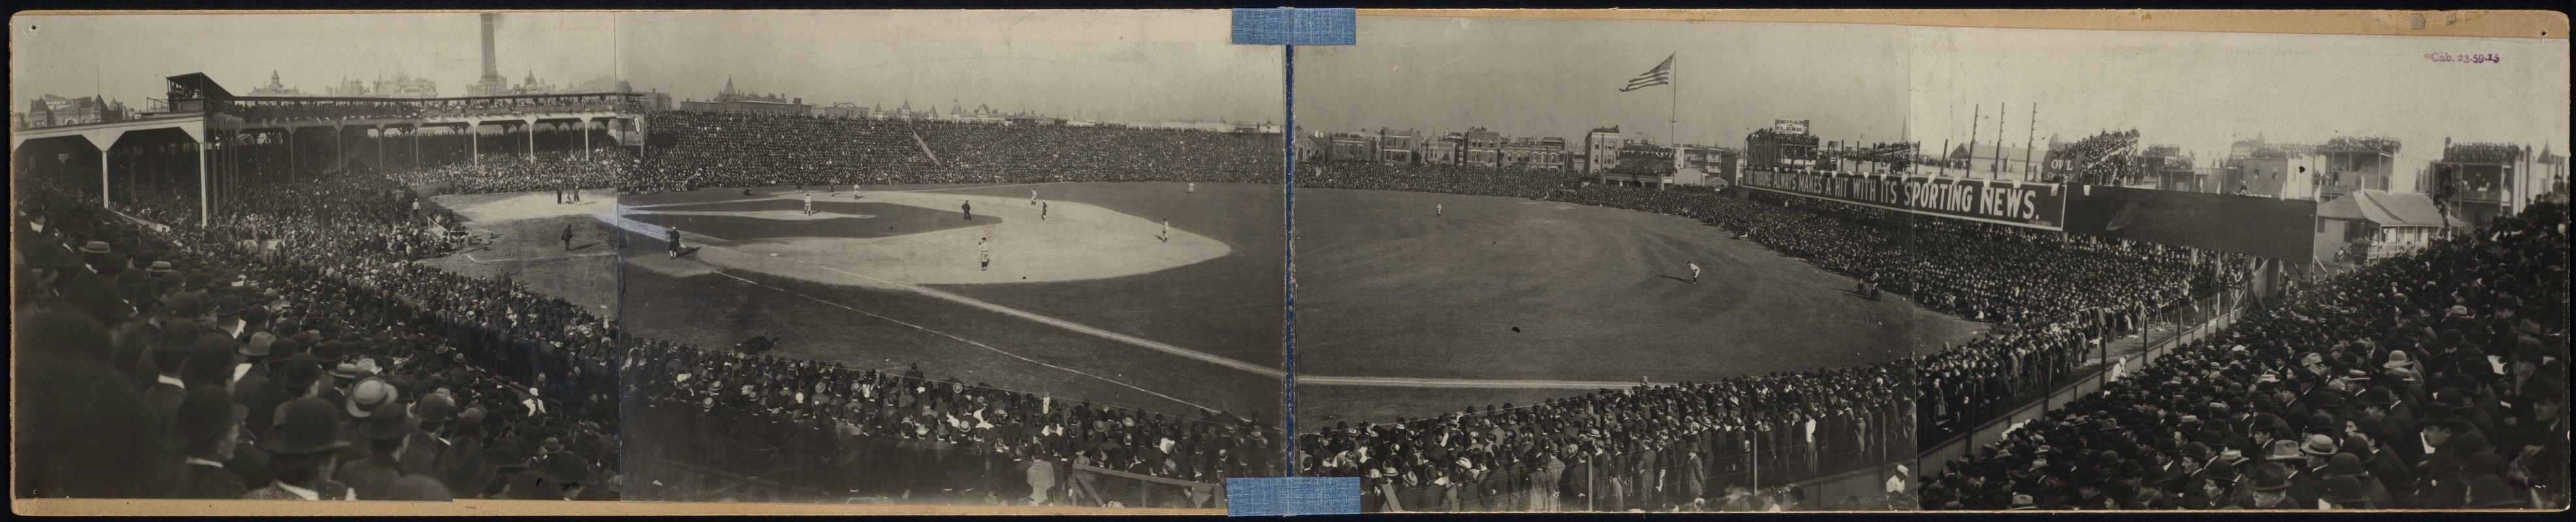 West Side Park, Chicago, 1906 World Series